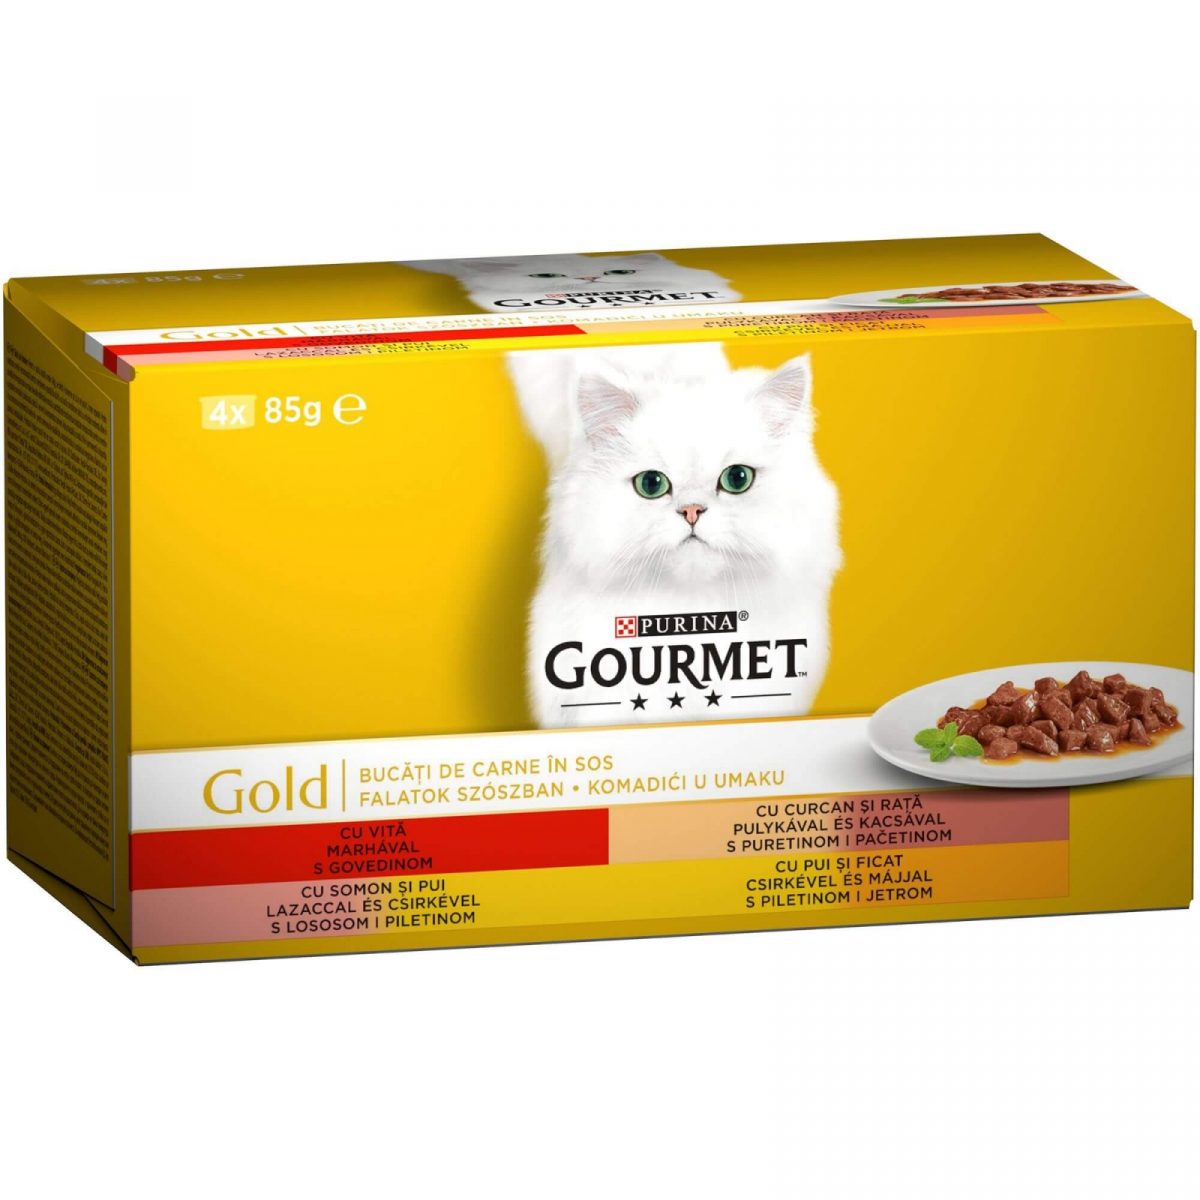 Gourmet Gold Duo Multipack Vita si Pui, 4x85 g.JPG2659